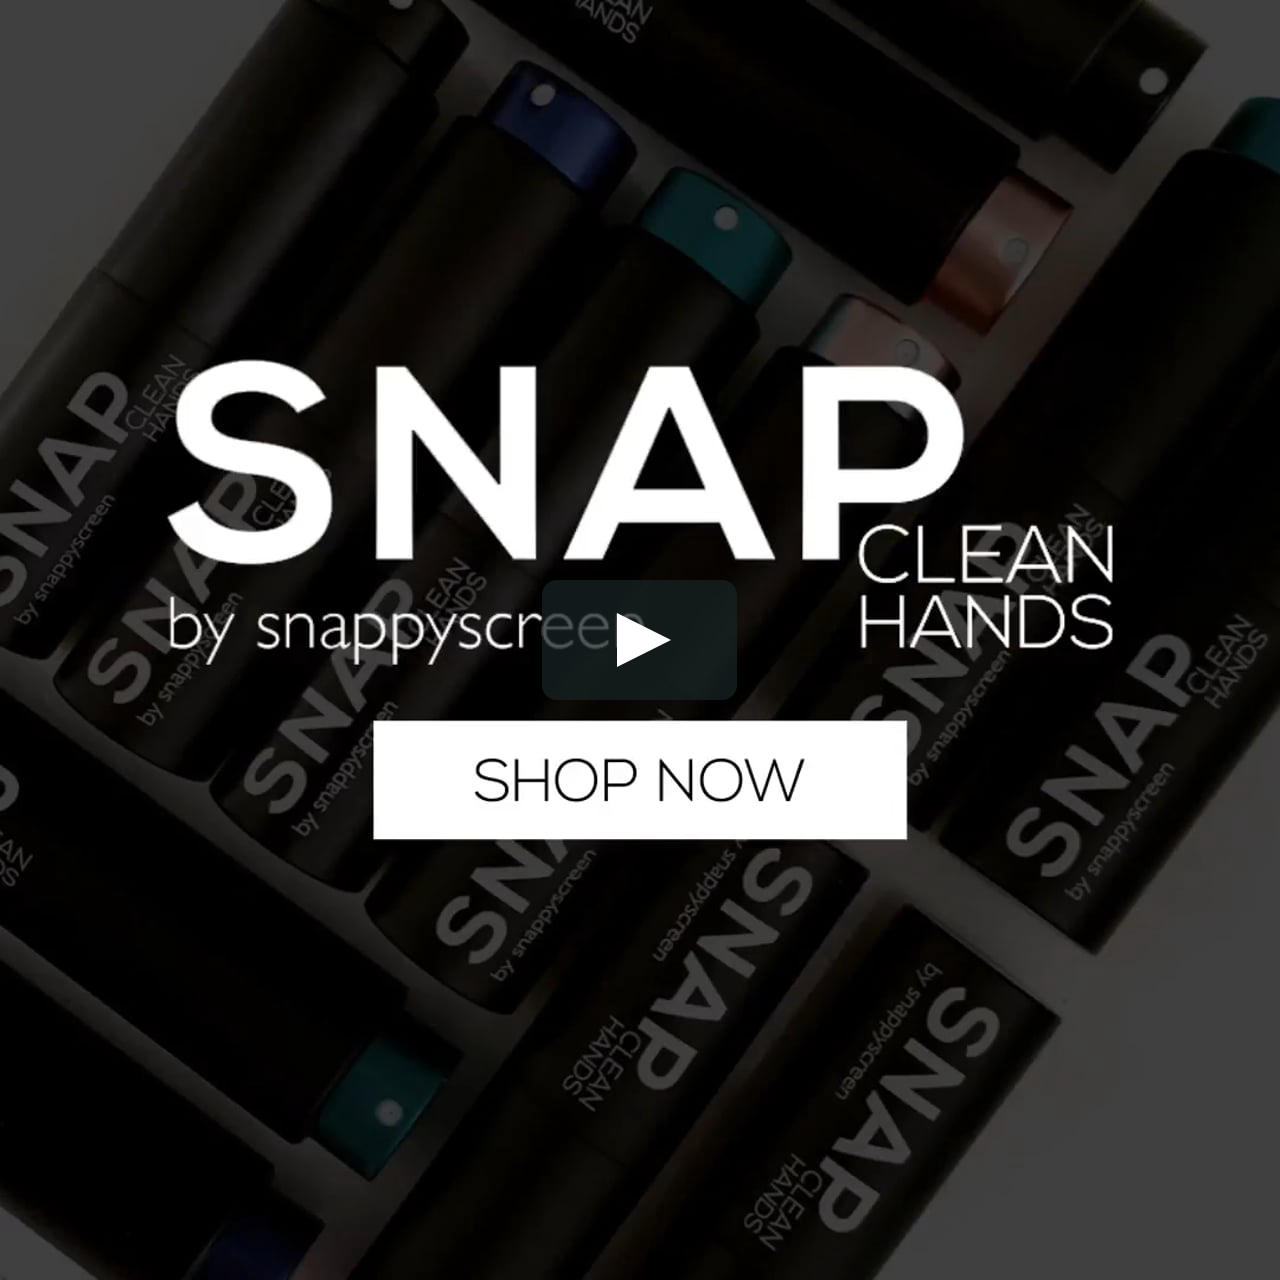 snappy app video